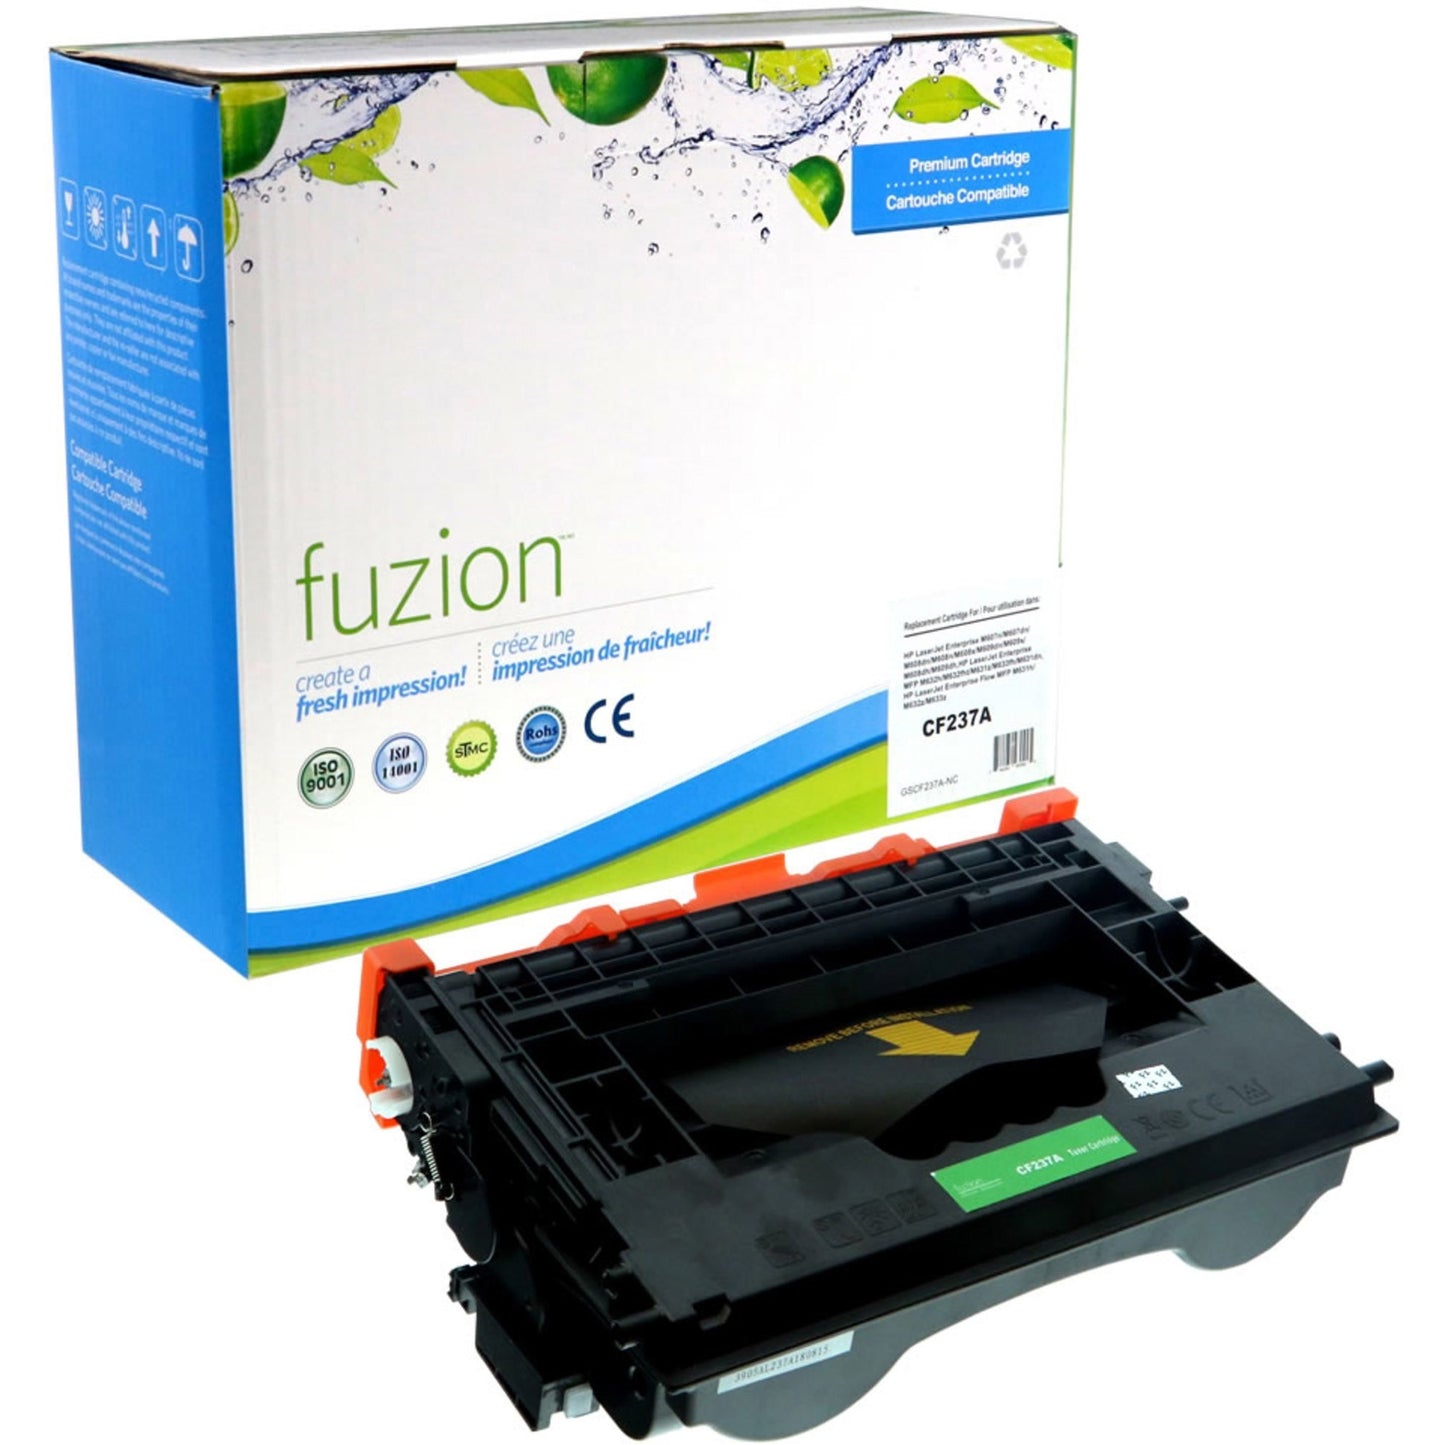 fuzion Toner Cartridge - Alternative for HP CF237A - Black